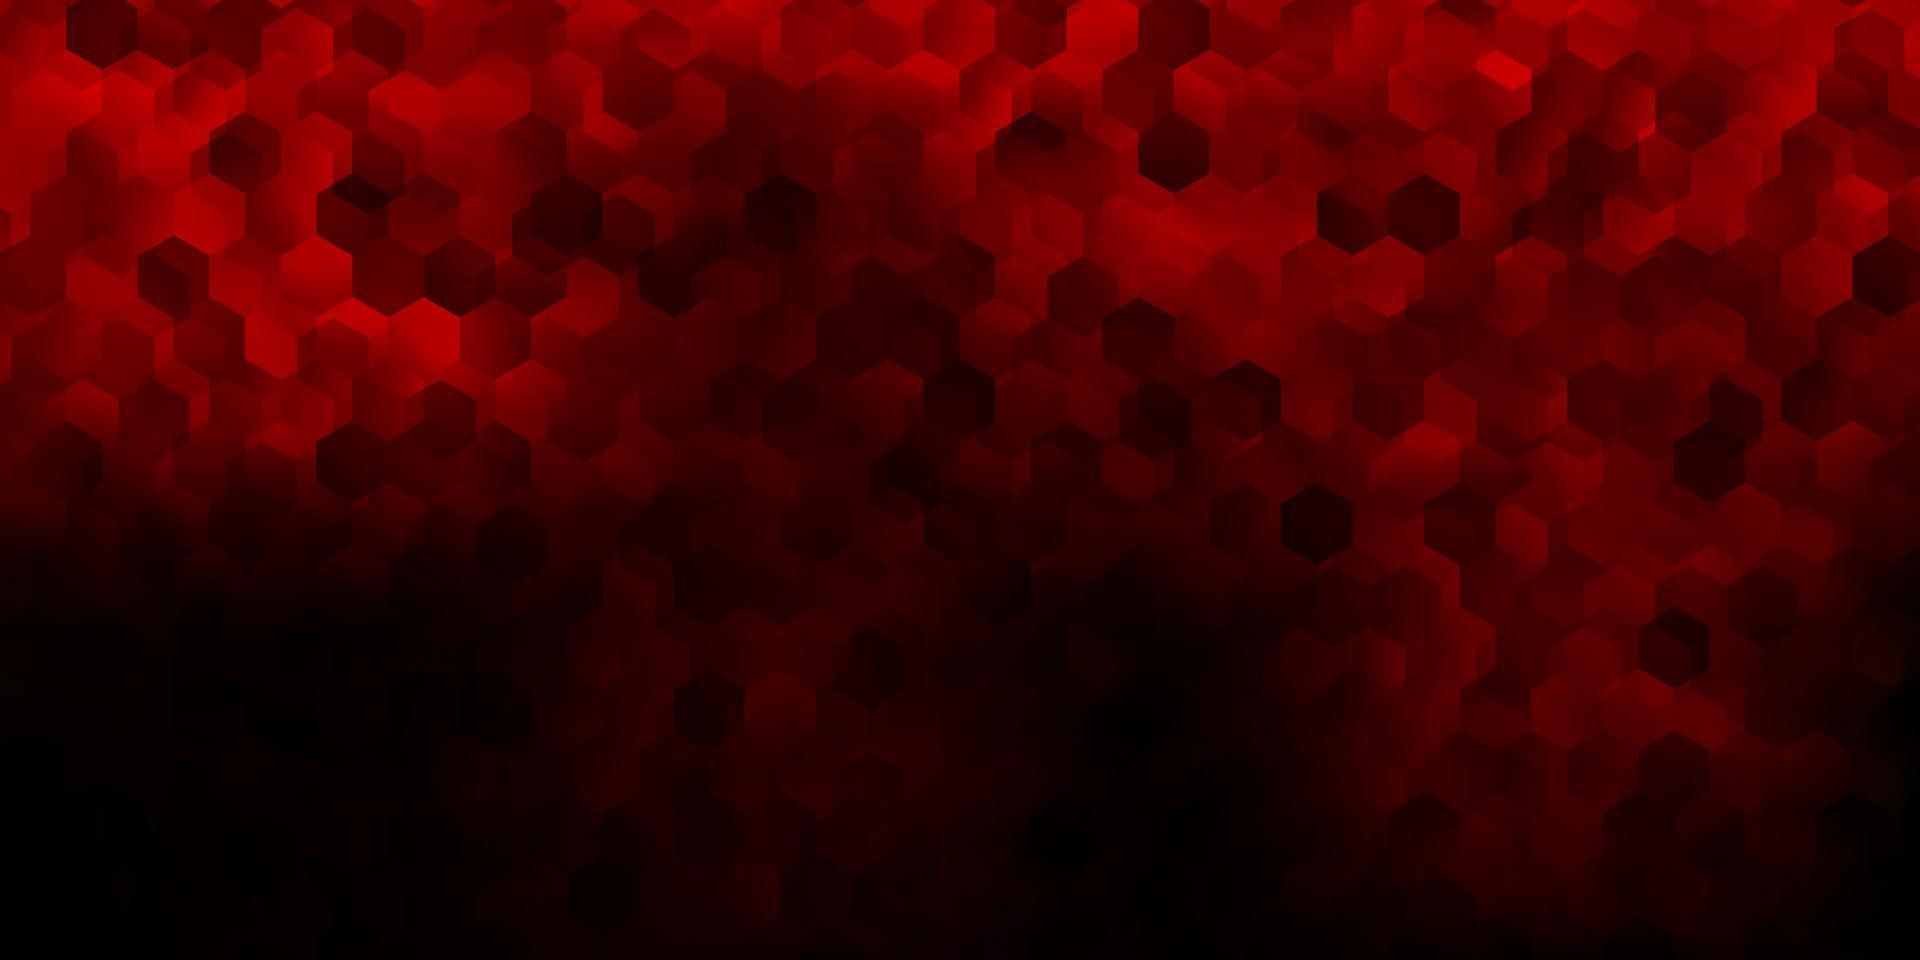 Telón de fondo de vector rojo oscuro con un lote de hexágonos.